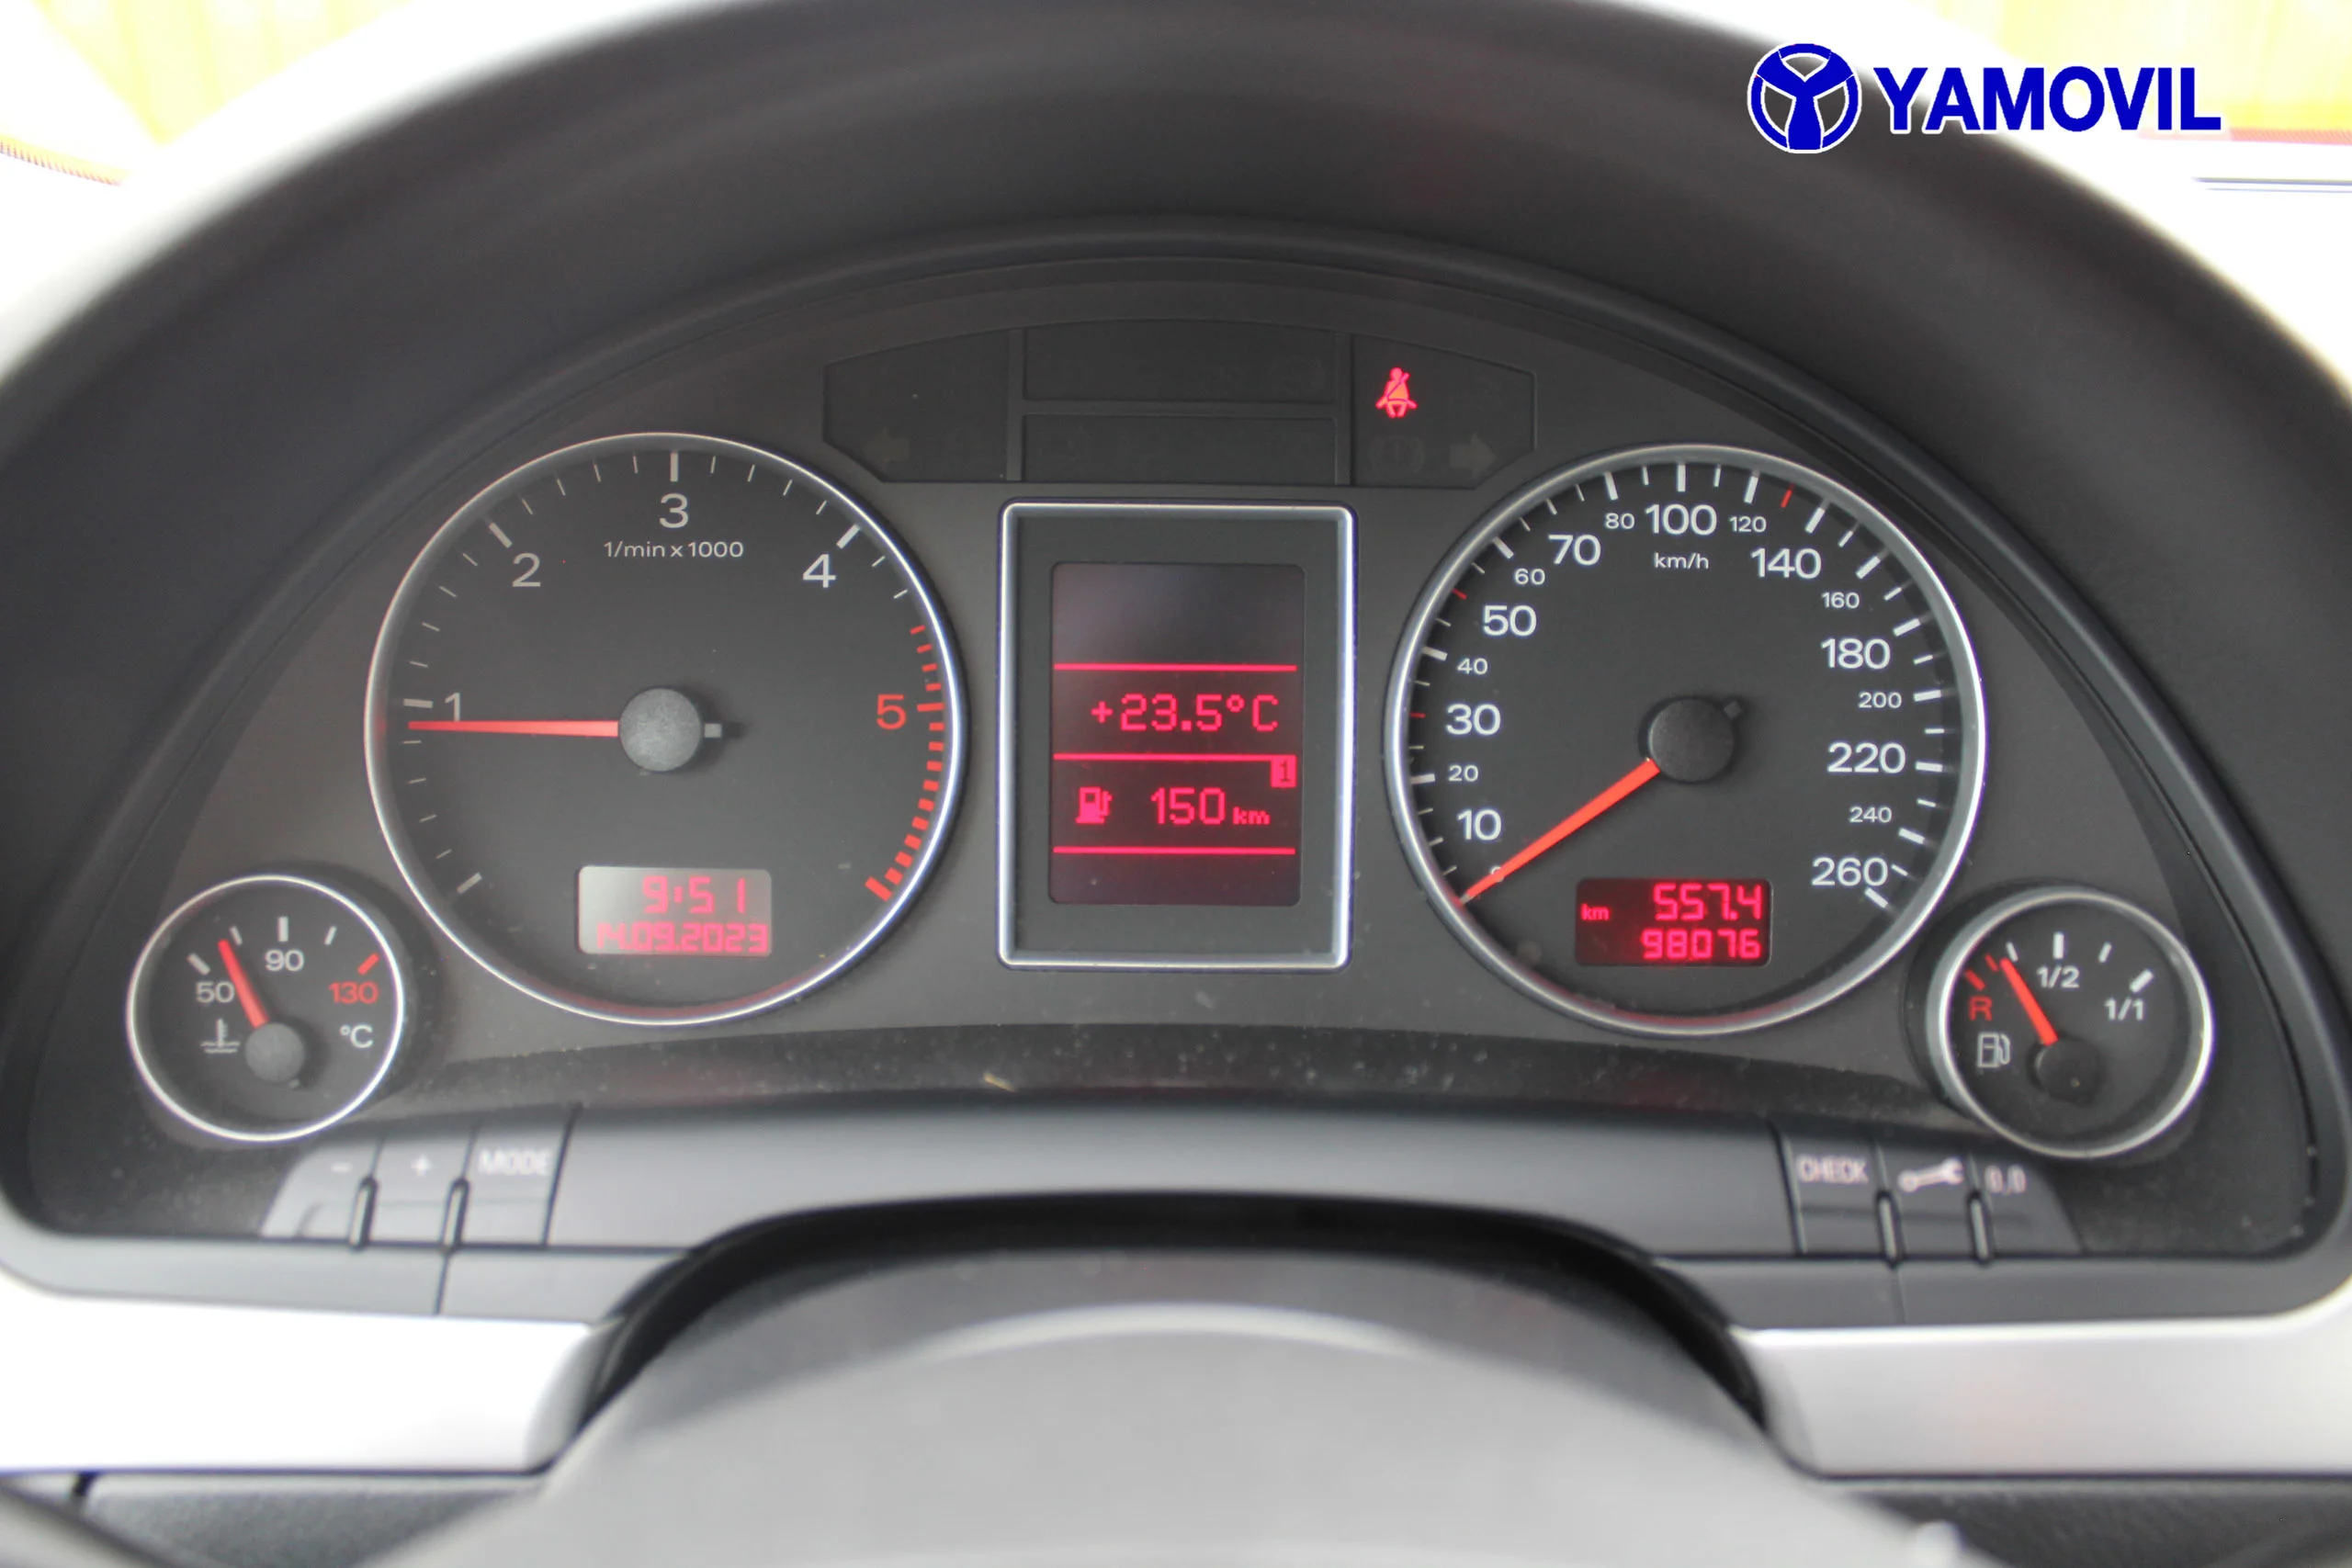 Audi A4 Avant 2.0 TDI 103 kW (140 CV) - Foto 25